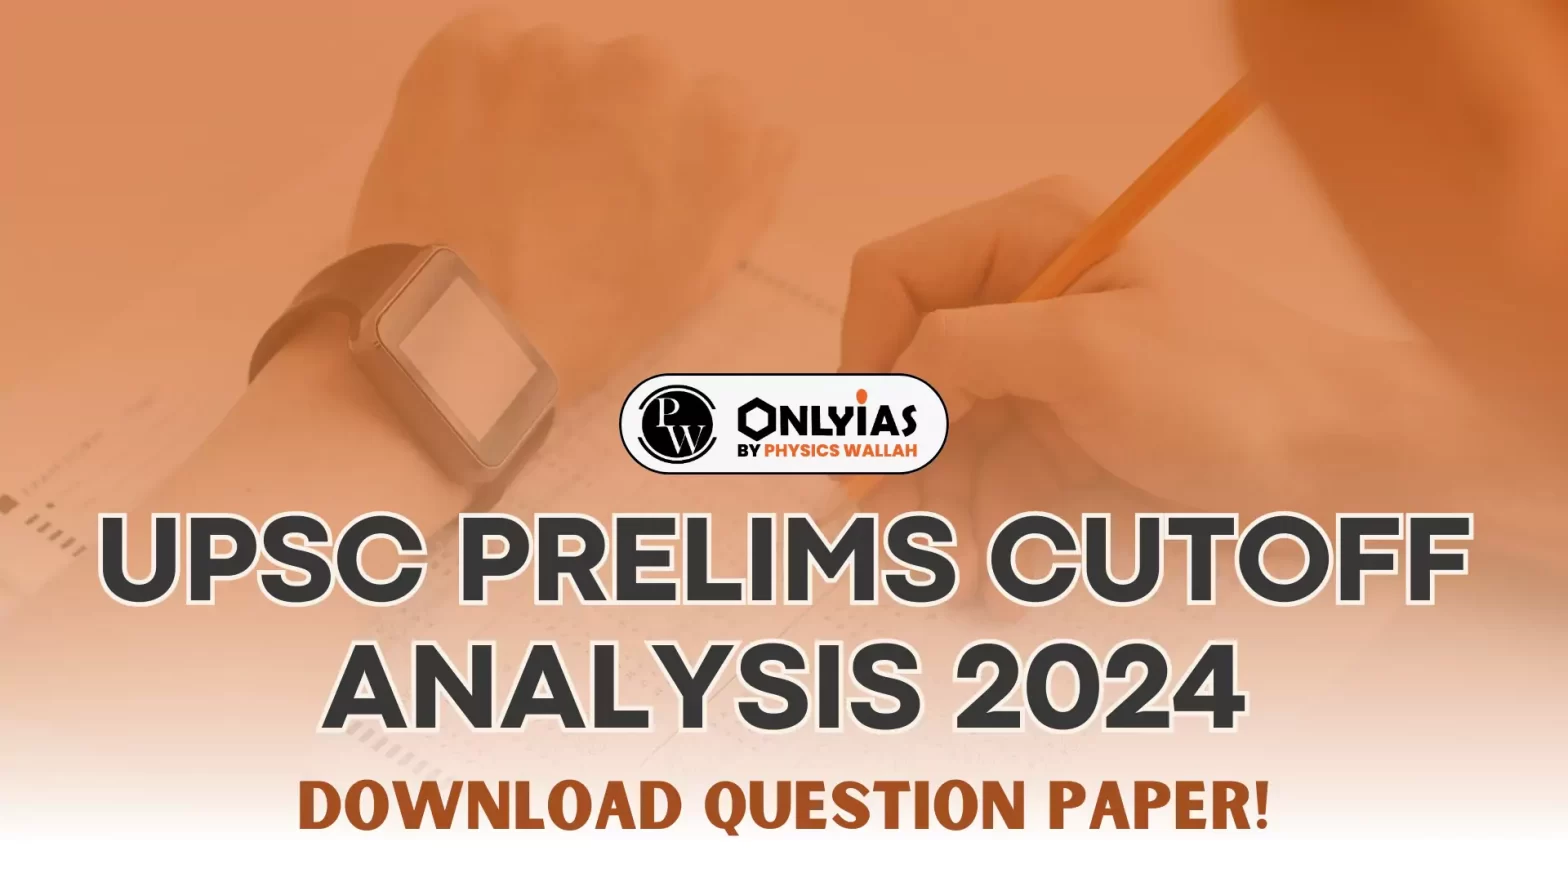 UPSC Prelims Cutoff Analysis 2024, Download Question Paper!